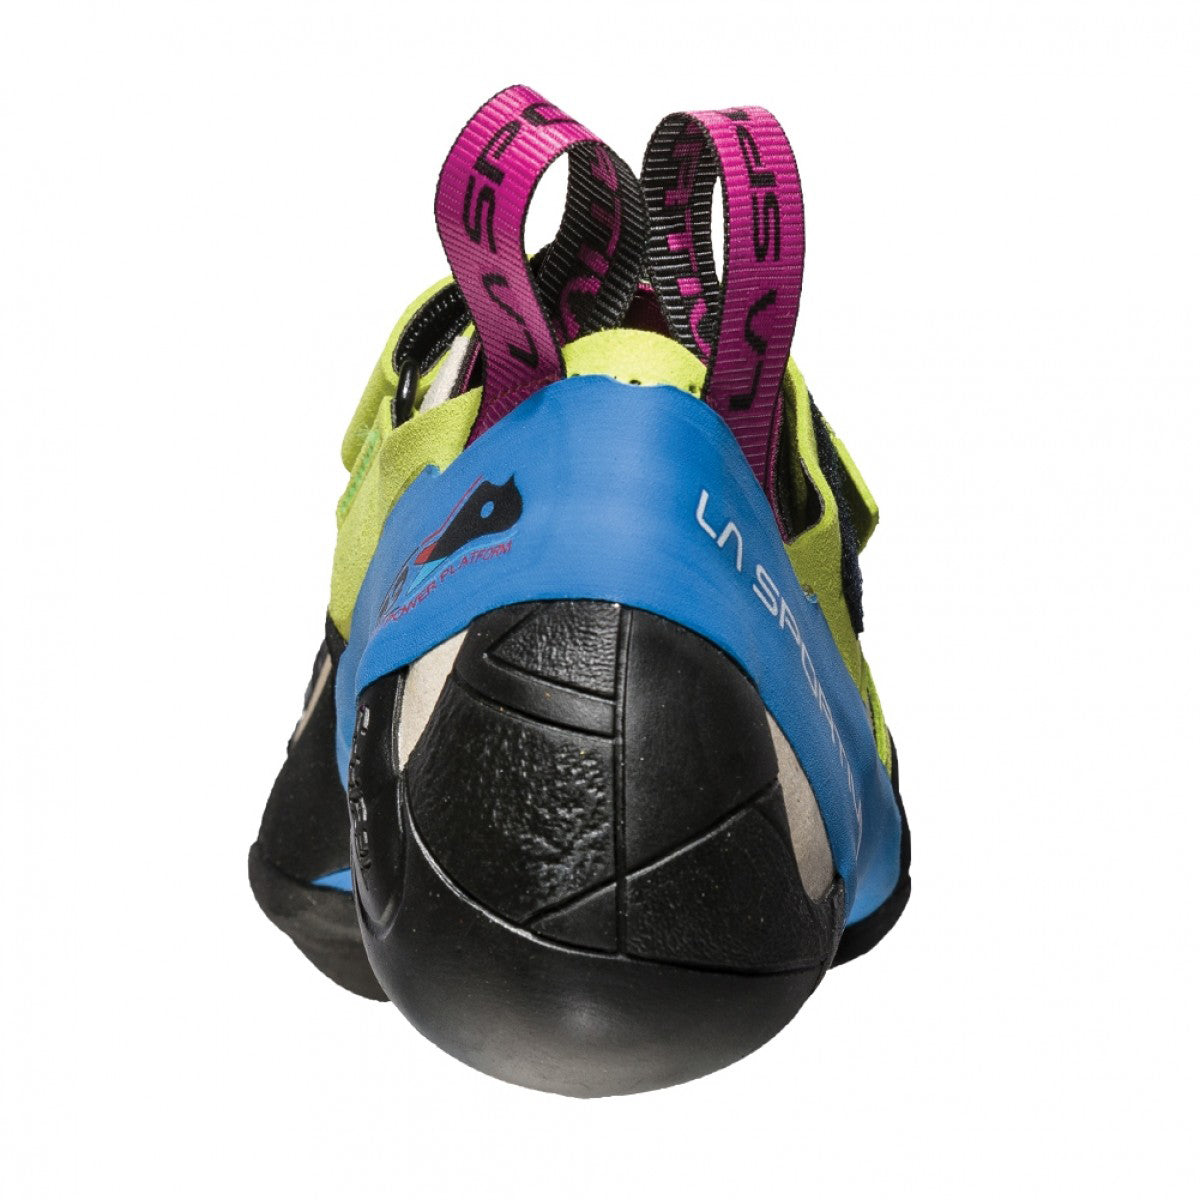 La Sportiva Skwama Women's climbing shoe, in black, blue and green colours